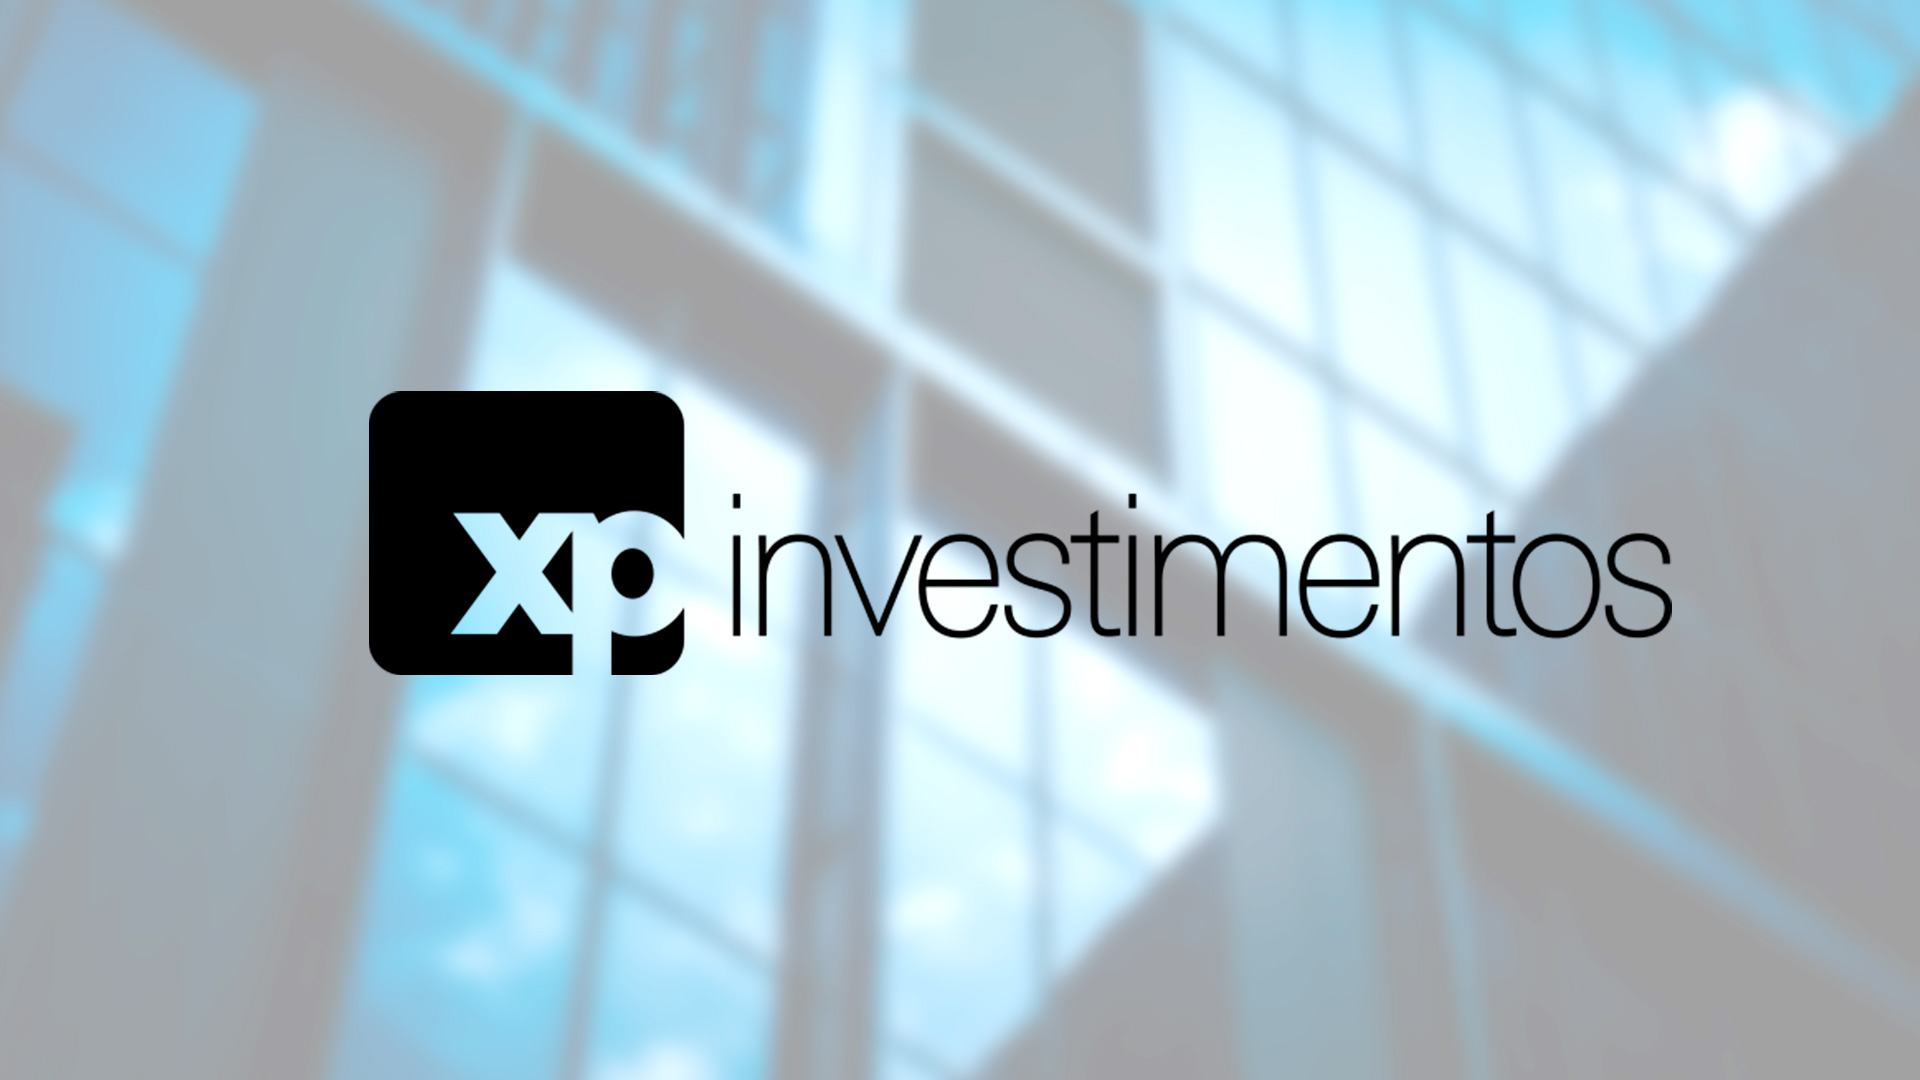 XP-investimentos